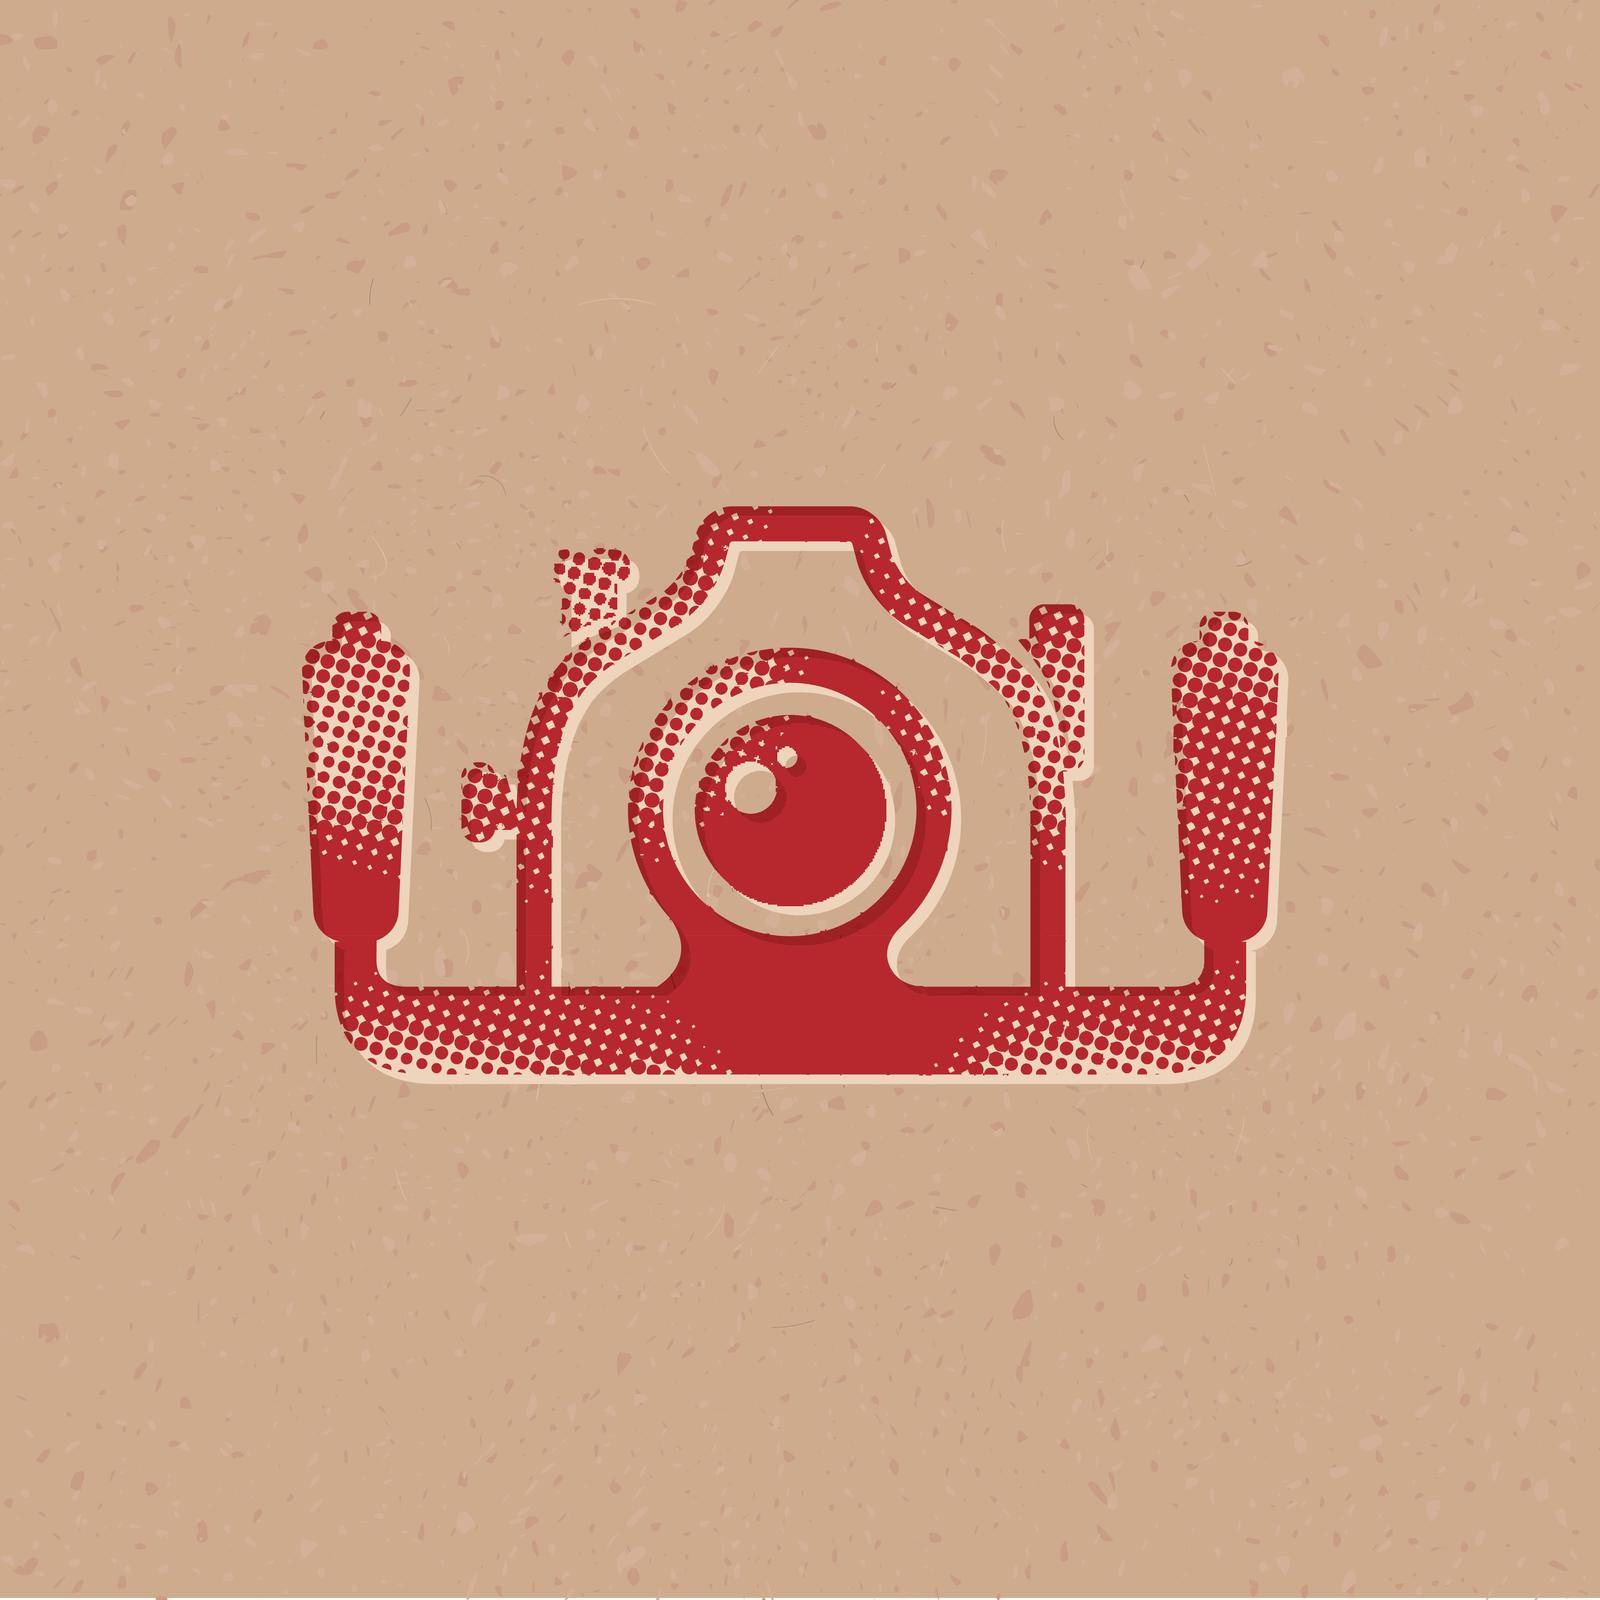 Underwater camera icon in halftone style. Grunge background vector illustration.